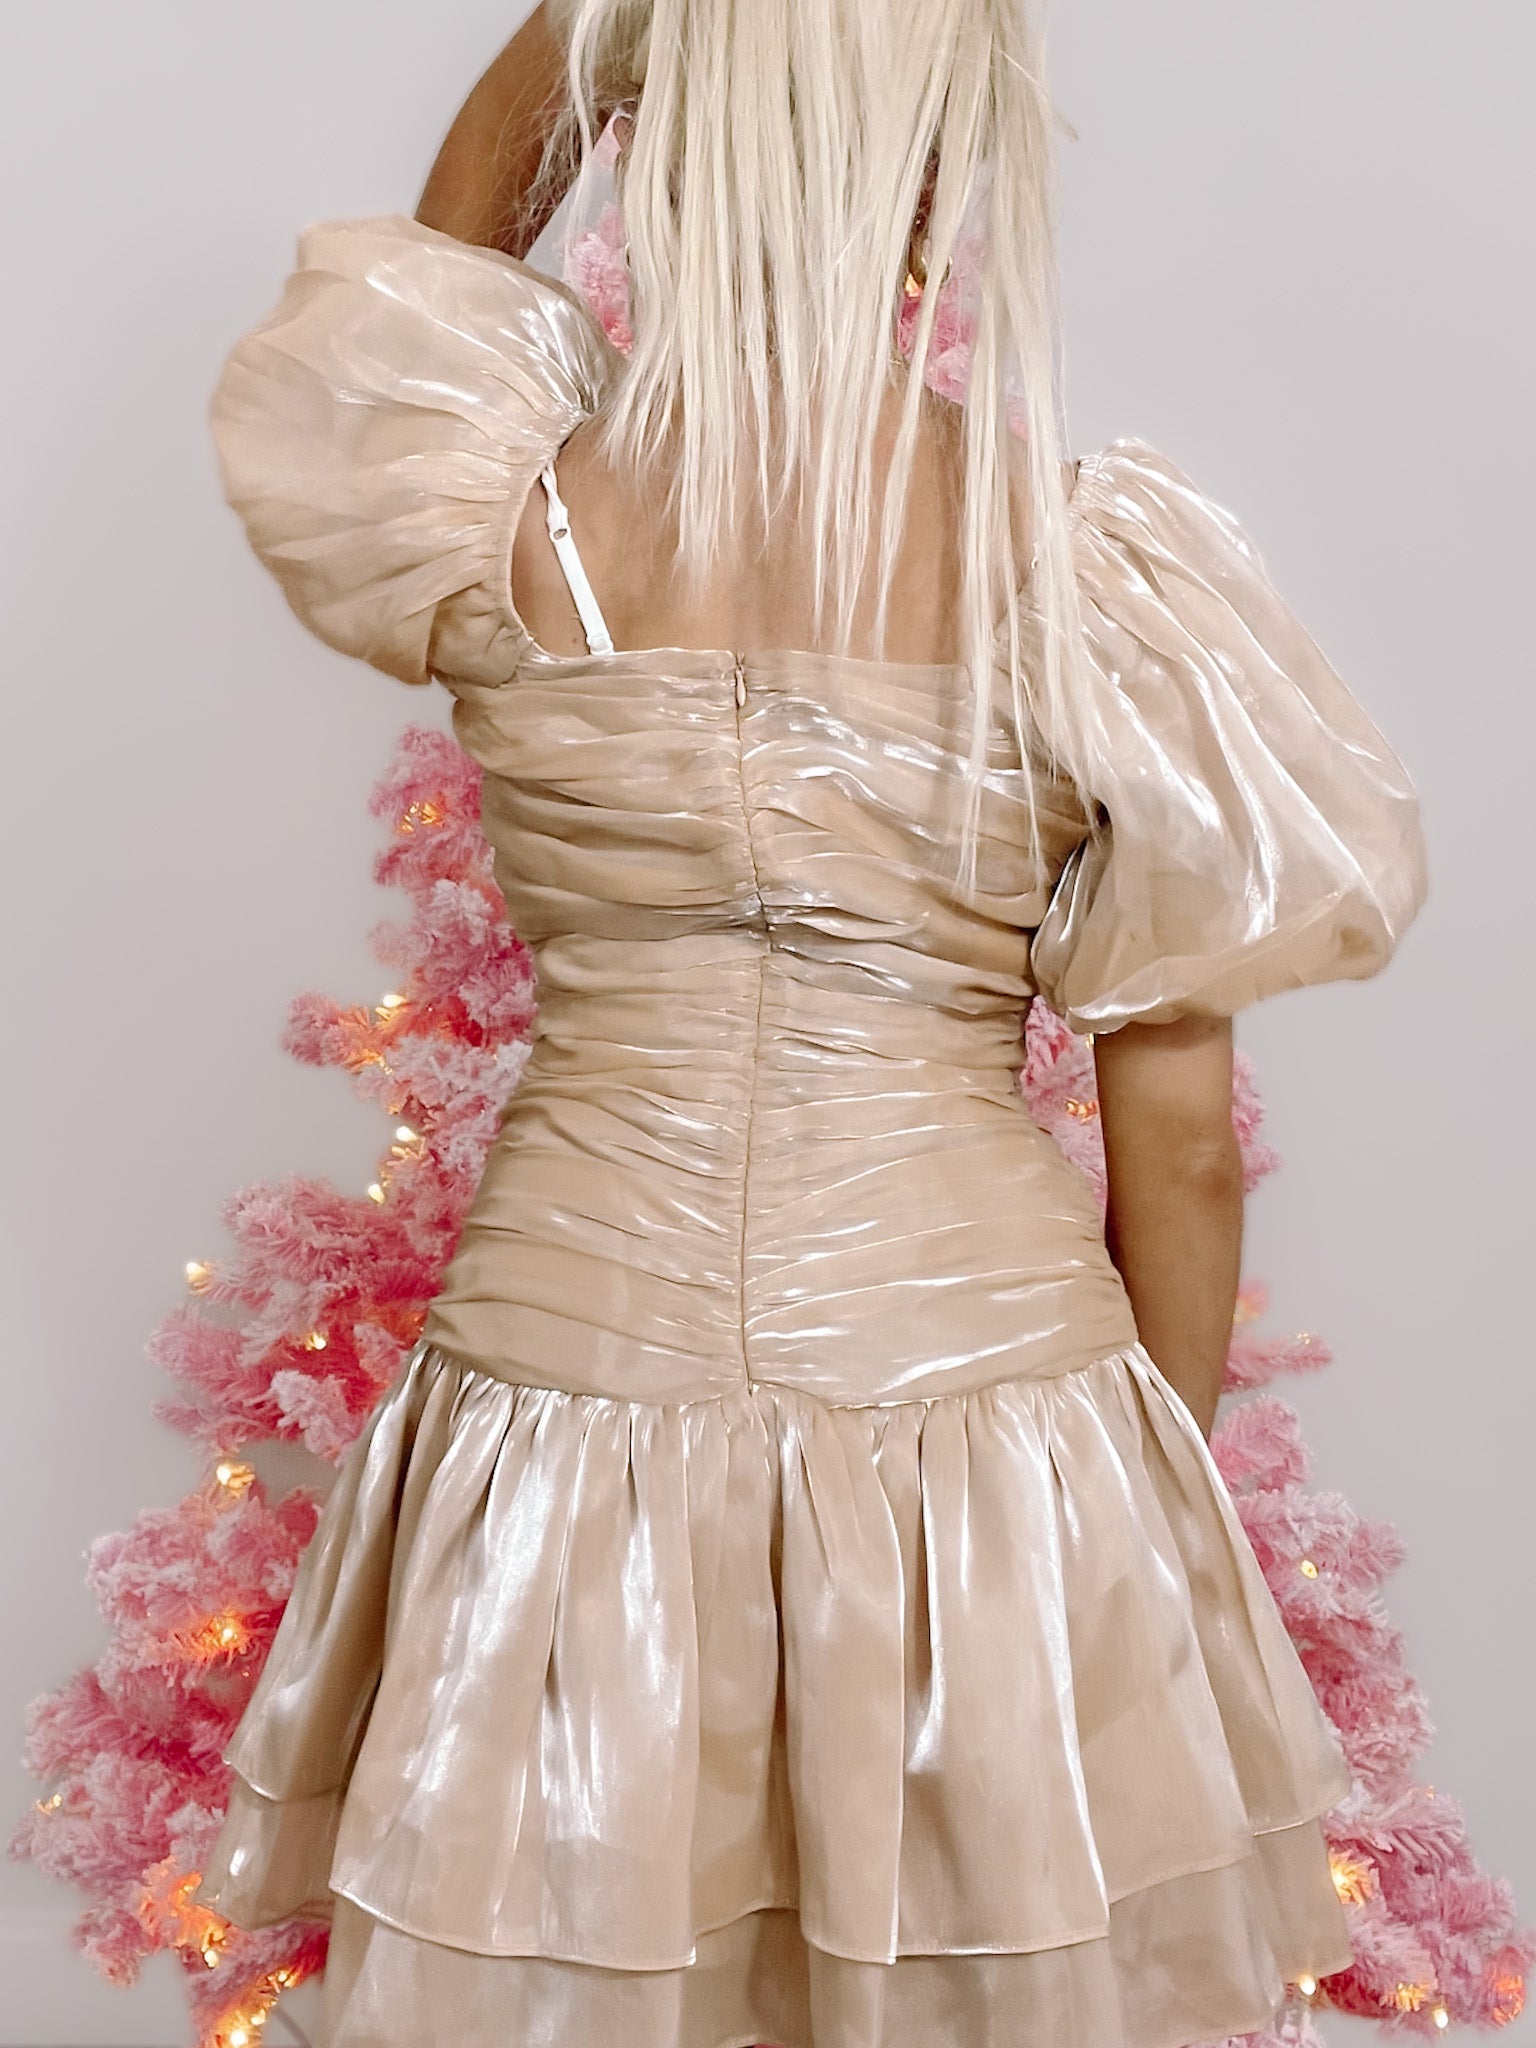 Shining Through the Snow Gold Dress | Sassy Shortcake | sassyshortcake.com